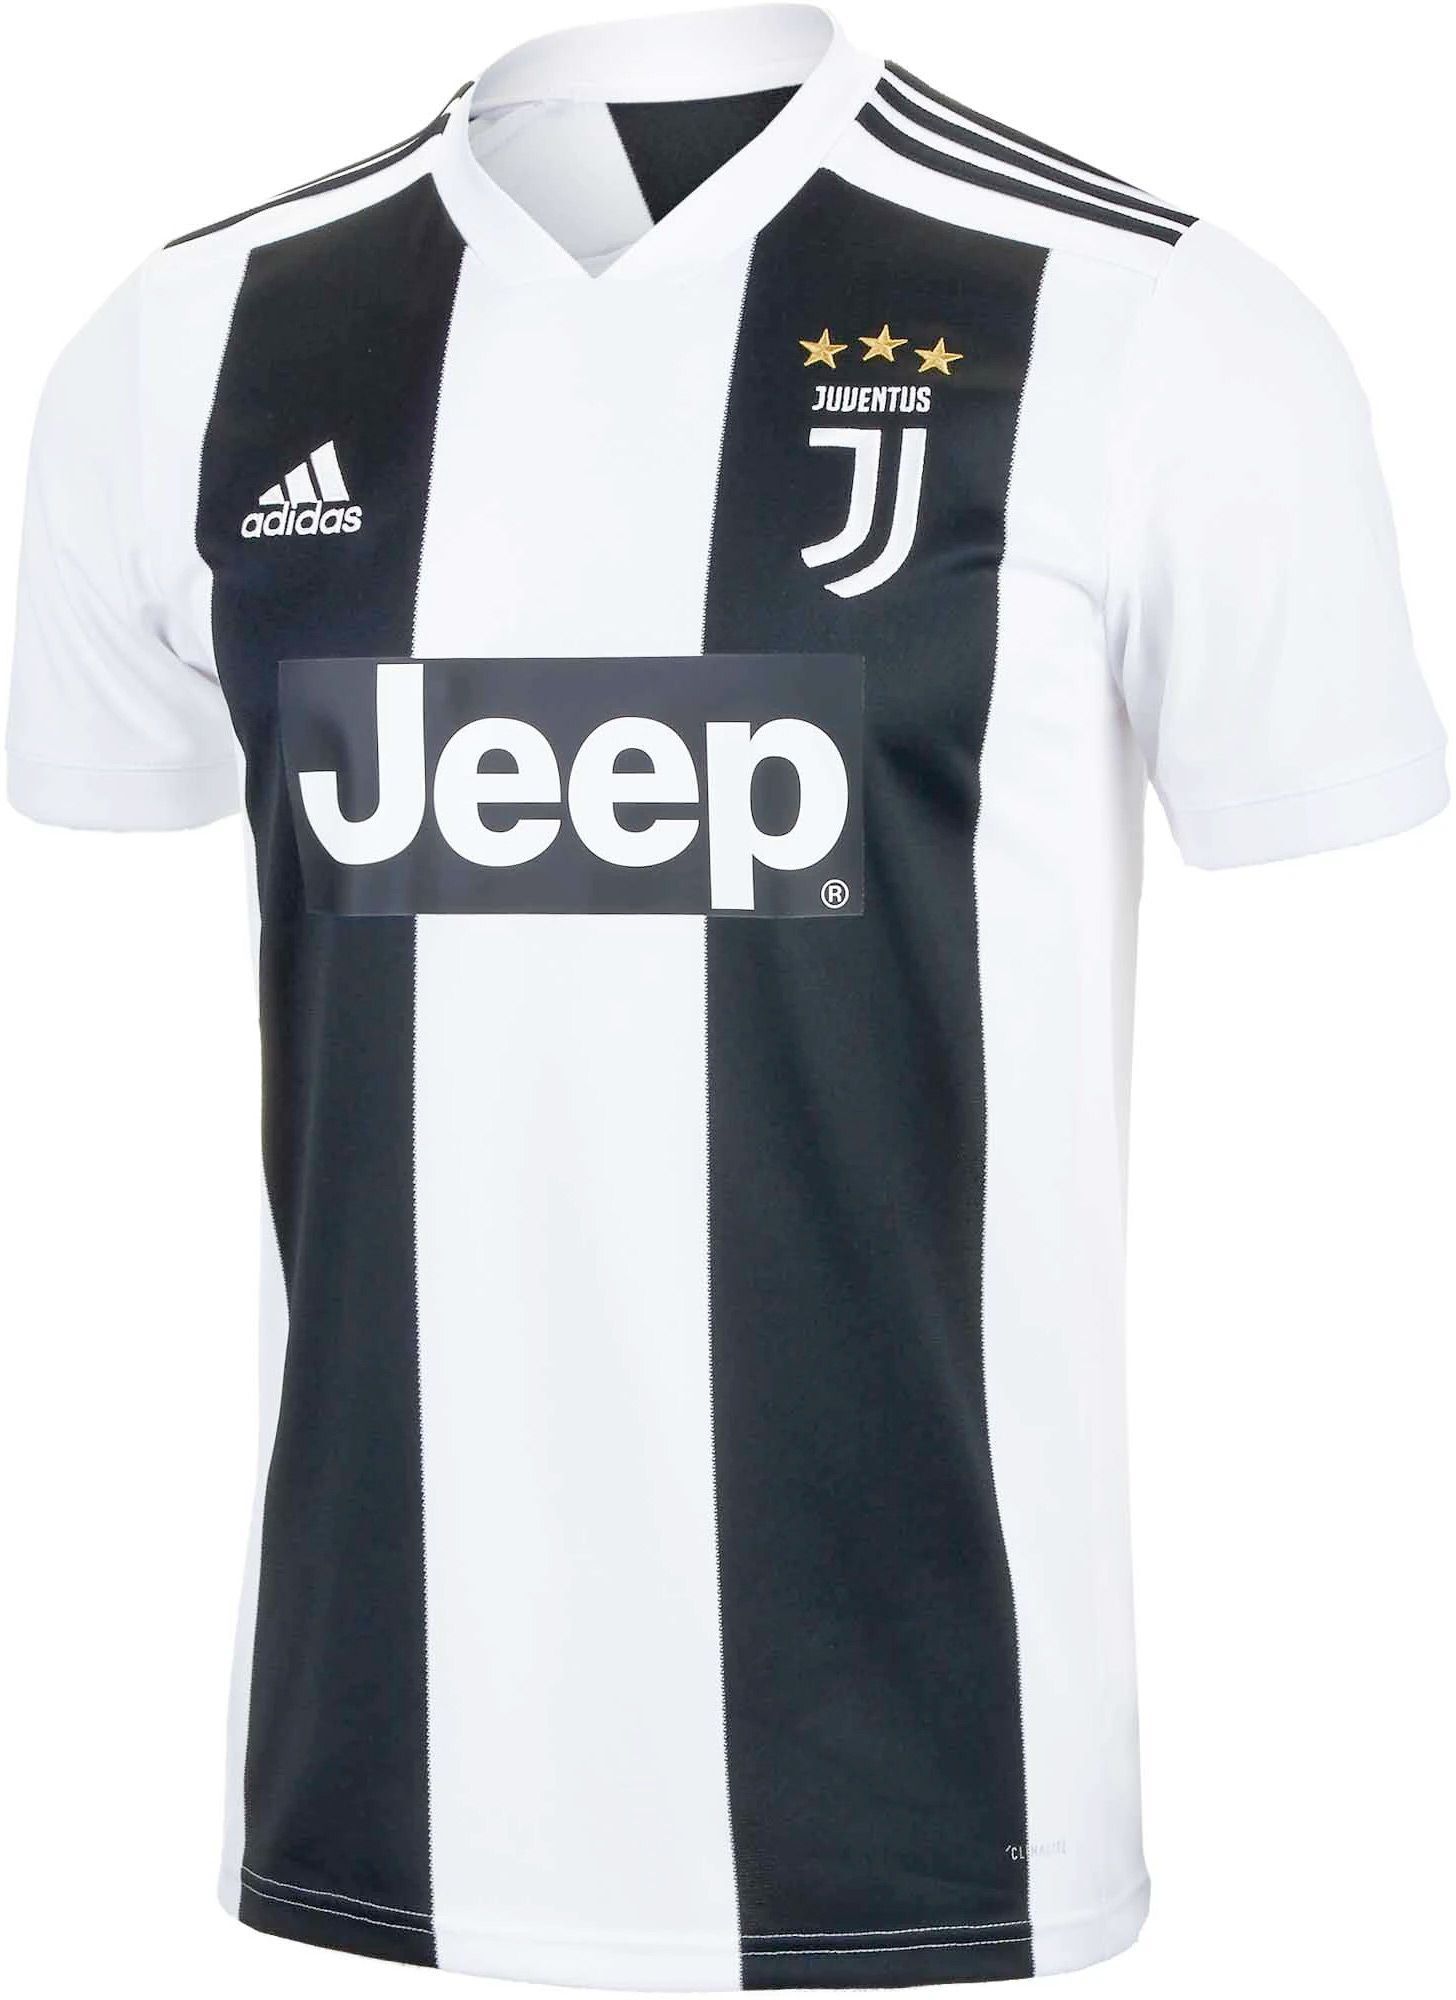 Juventus thuisshirt seizoen 2018/2019